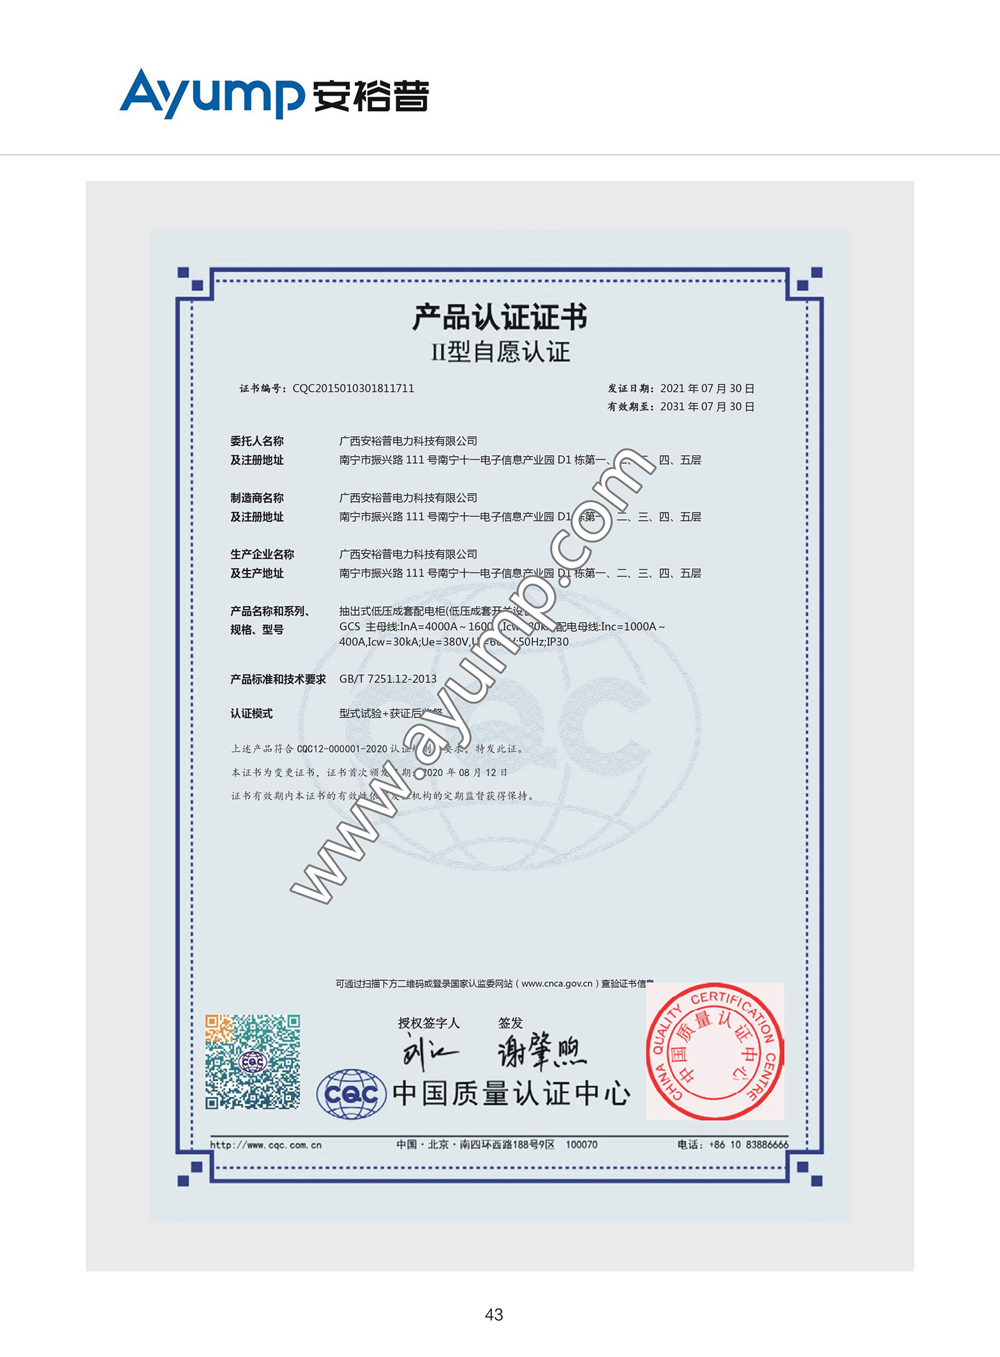 GCS抽出式低壓成套配電柜國家強制性產品認證證書Ⅱ型自愿認證